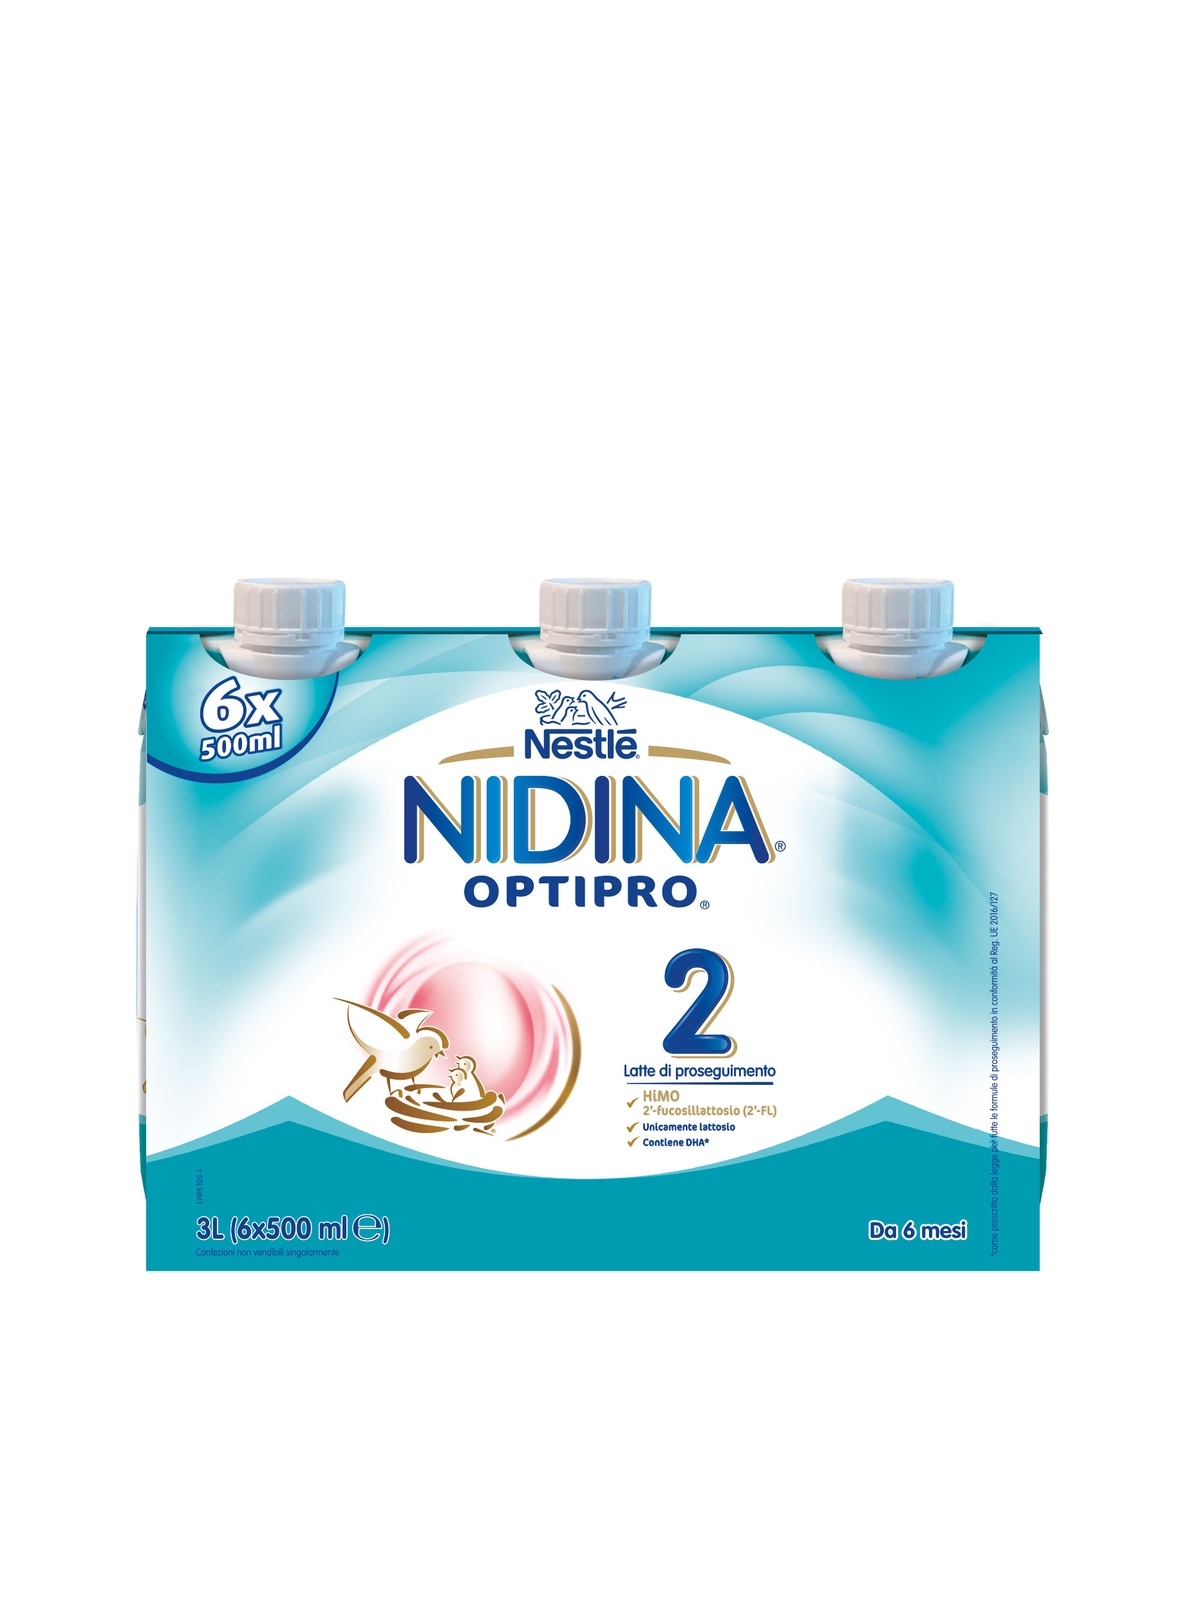 Nestle' nidina optipro 2 da 6 mesi, latte di proseguimento liquido, 6 brick  da 500ml - Bimbostore